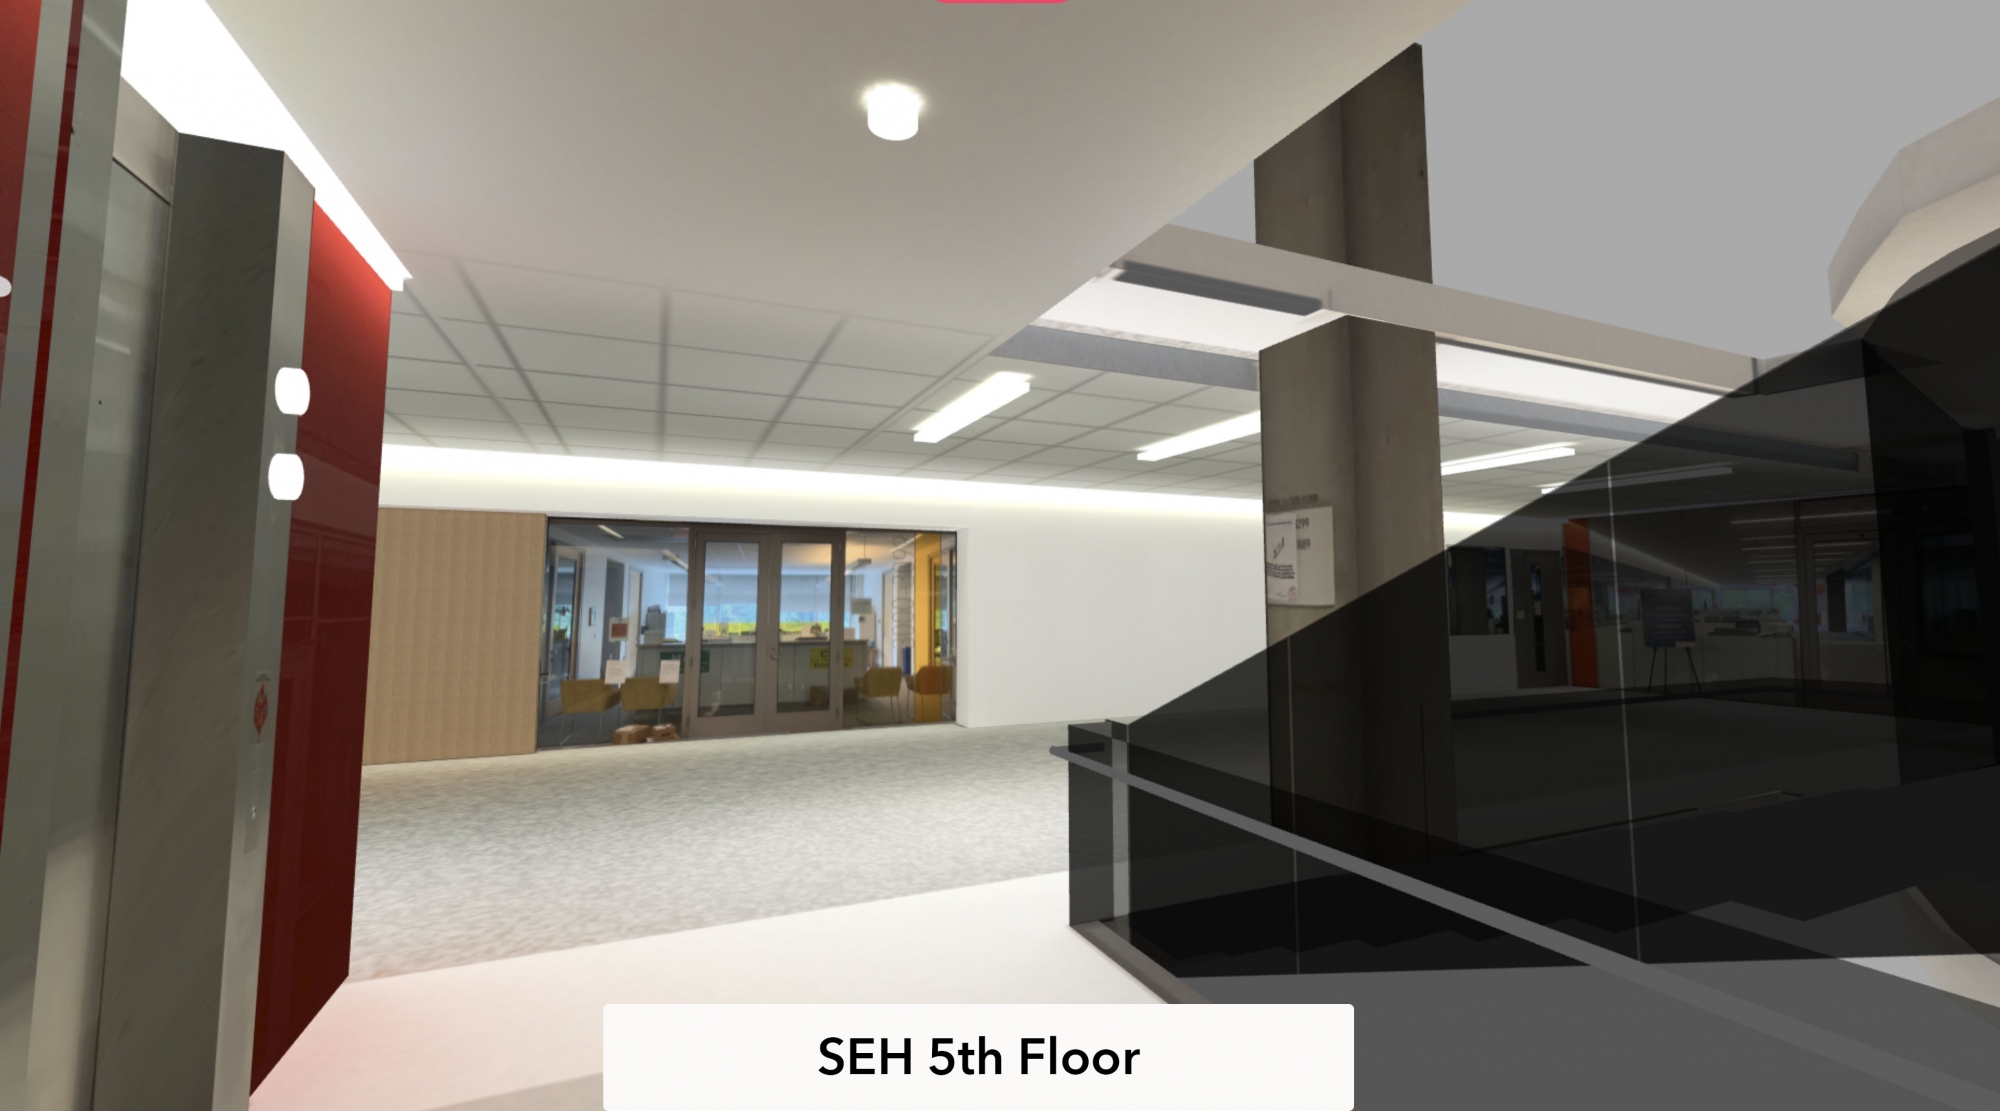 seh 5th floor virtual room